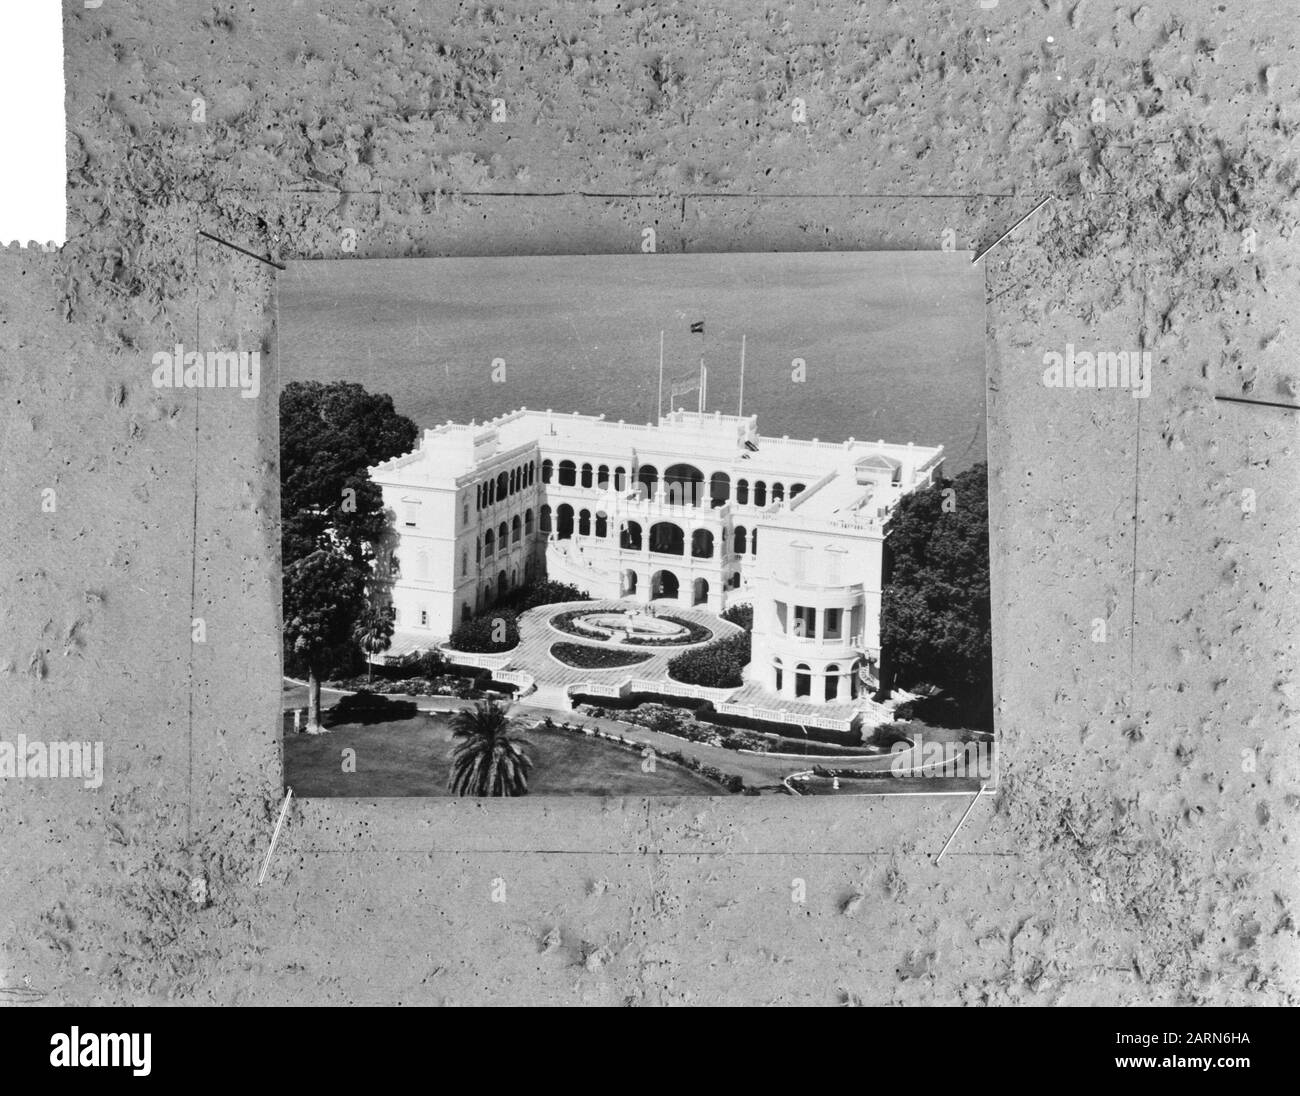 Sayed Mohamed Ahmed Mahgoub, The Palace (Exterieur) Datum: 27. Januar 1965 Schlüsselwörter: Exterieur, Paläste Stockfoto